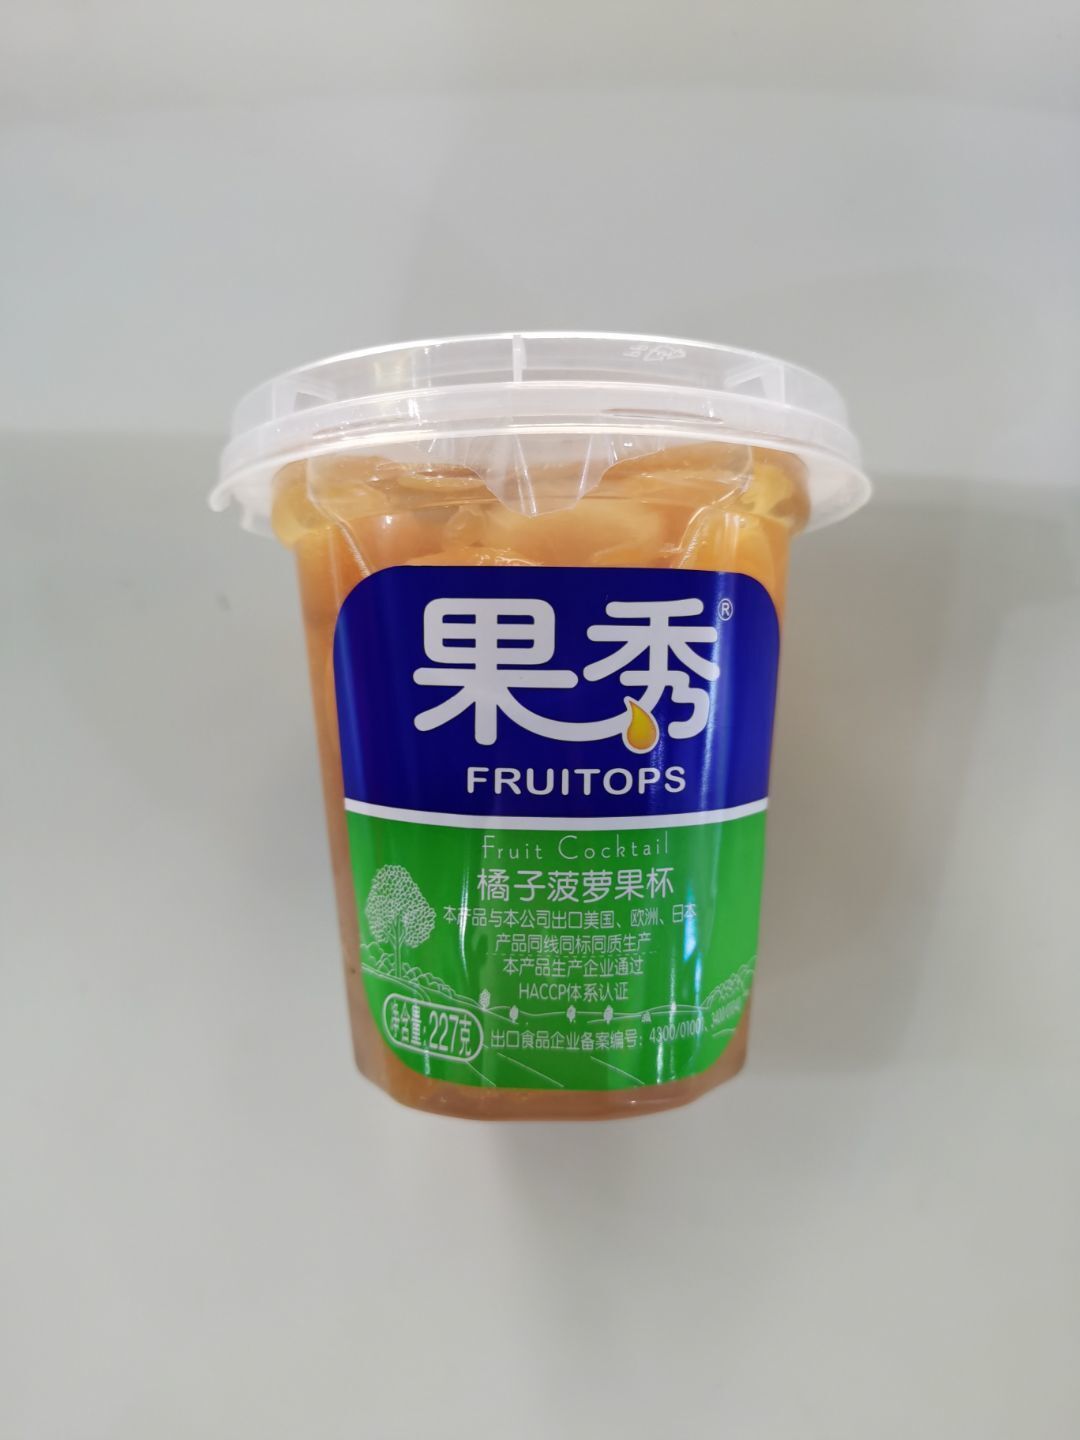 016 Guoxiu Orange Pineapple Fruit Cup 227g